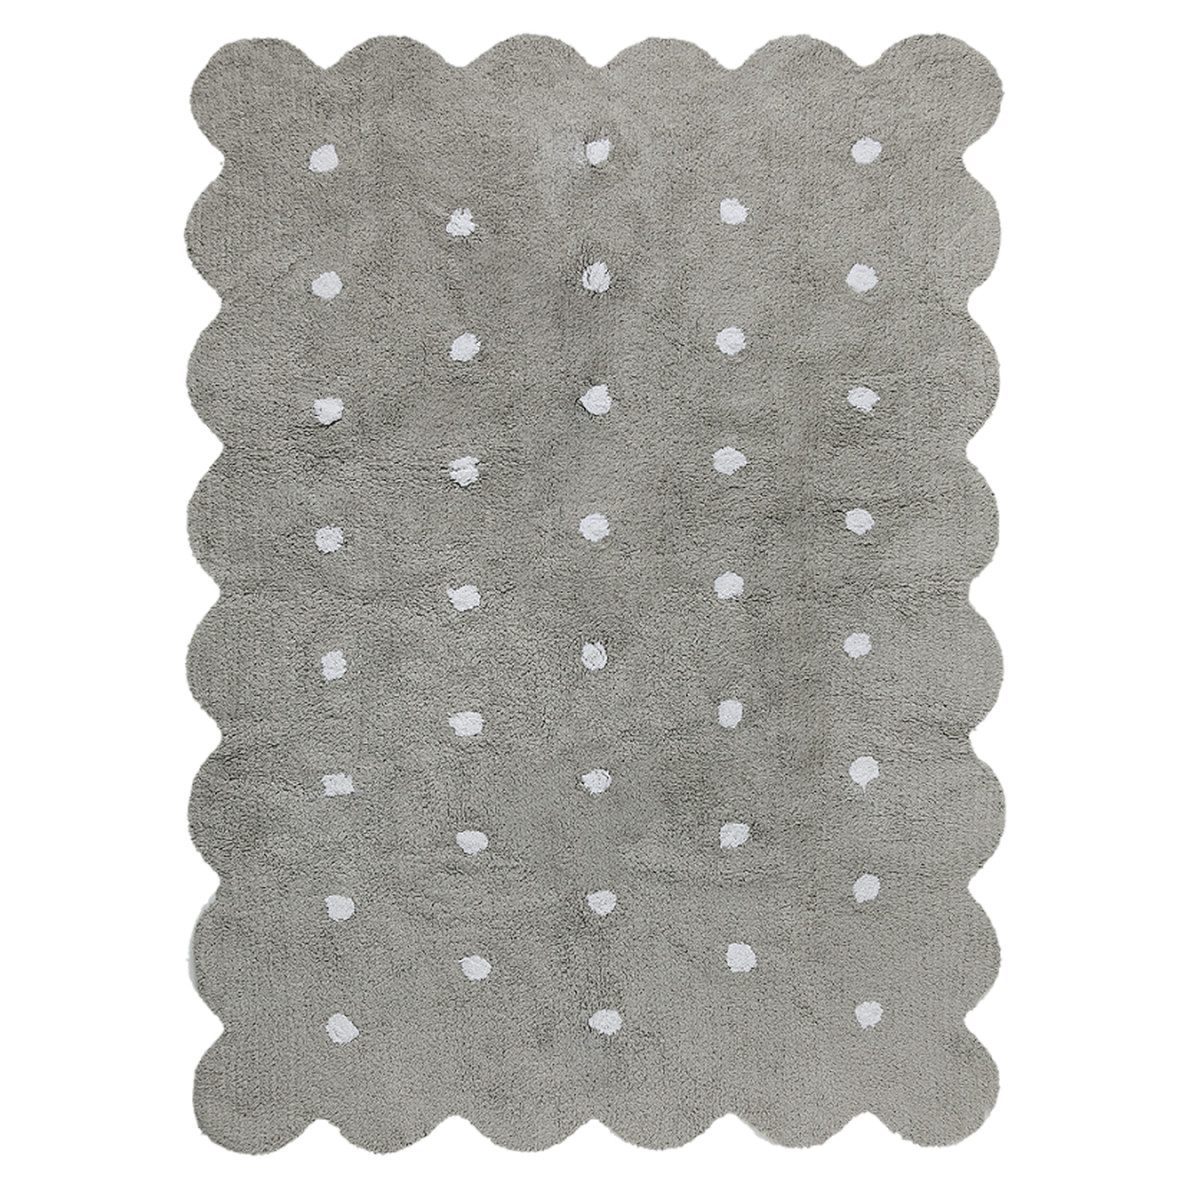 Pre zvieratá: Prateľný koberec Biscuit Grey